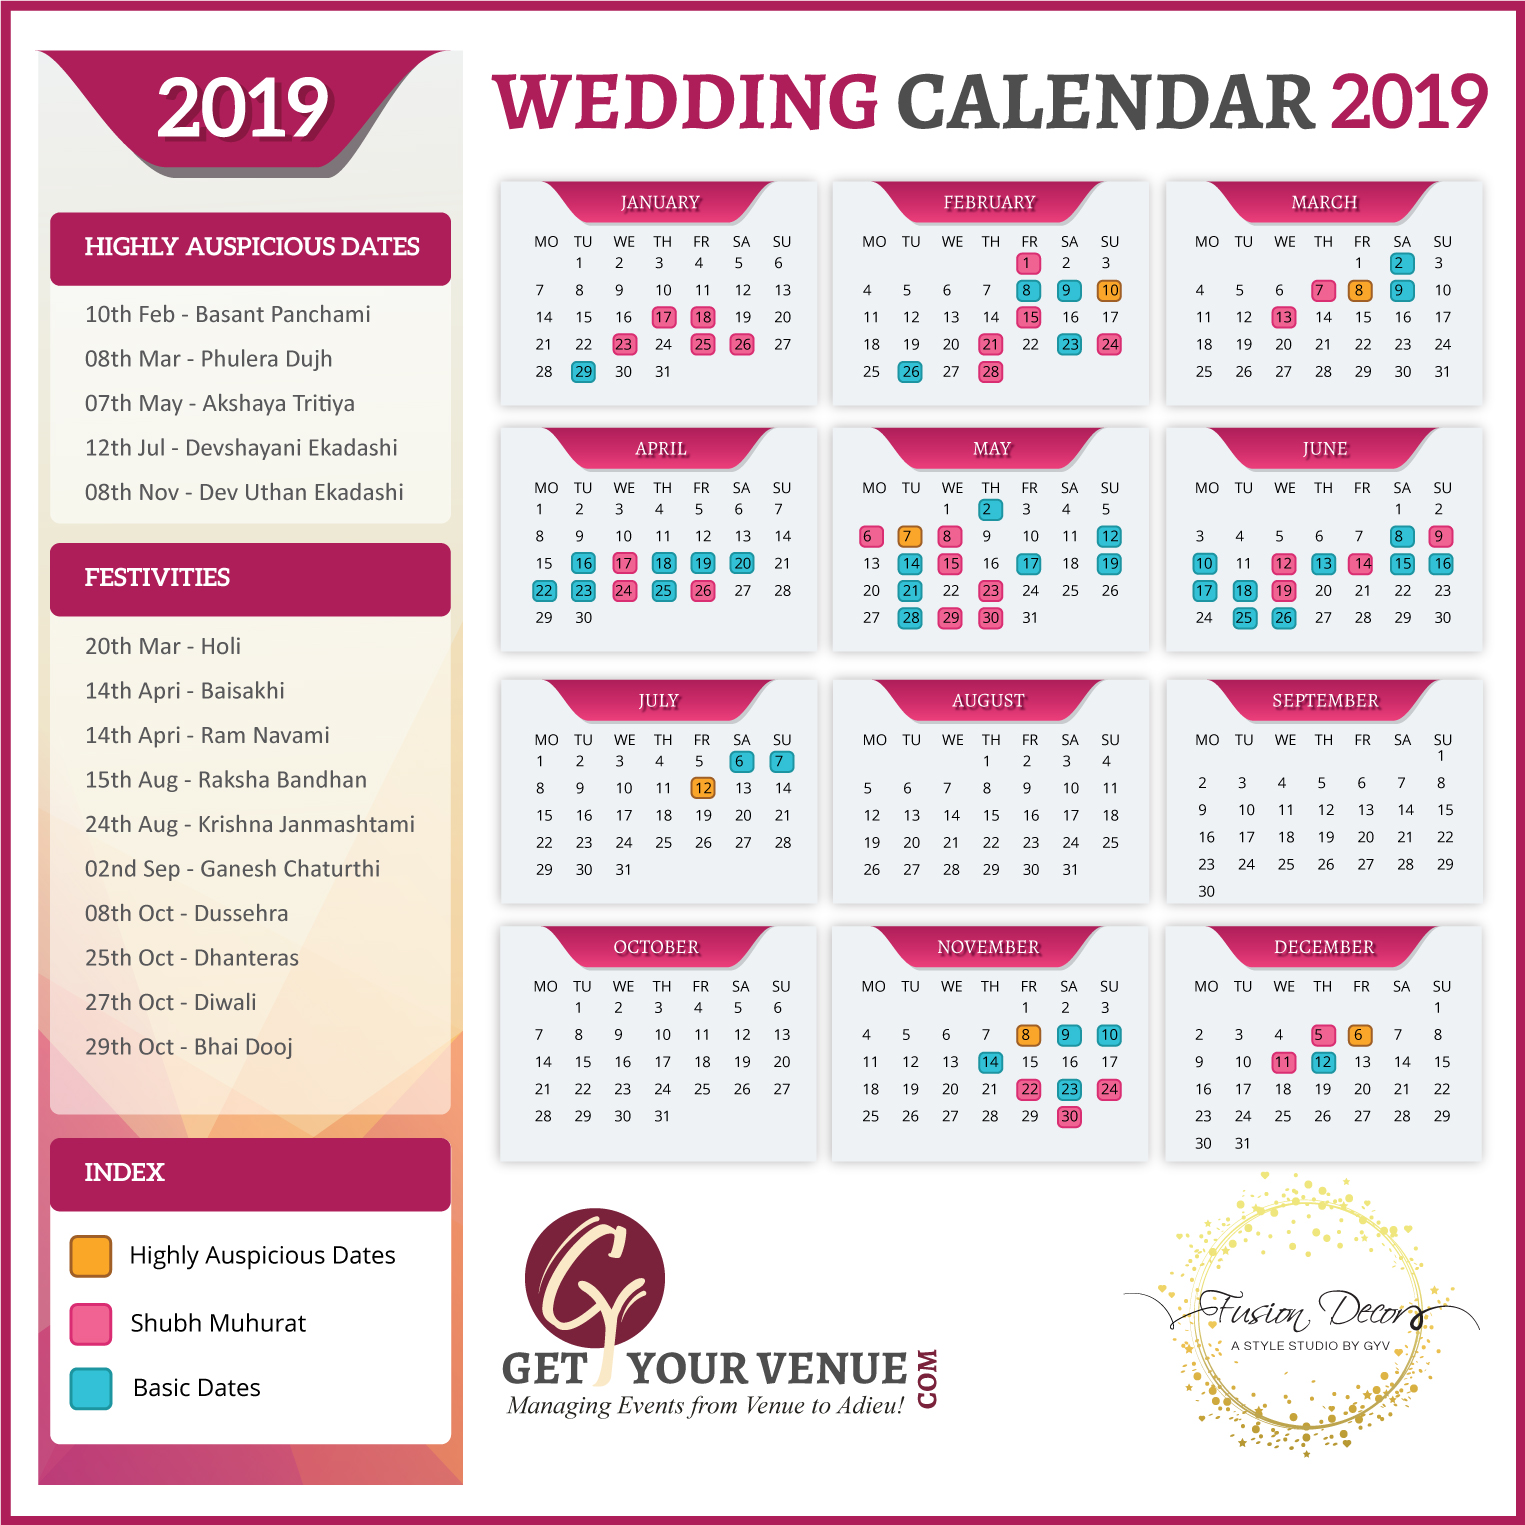 Best Wedding Dates To Get Married in 2019 GYV Blog